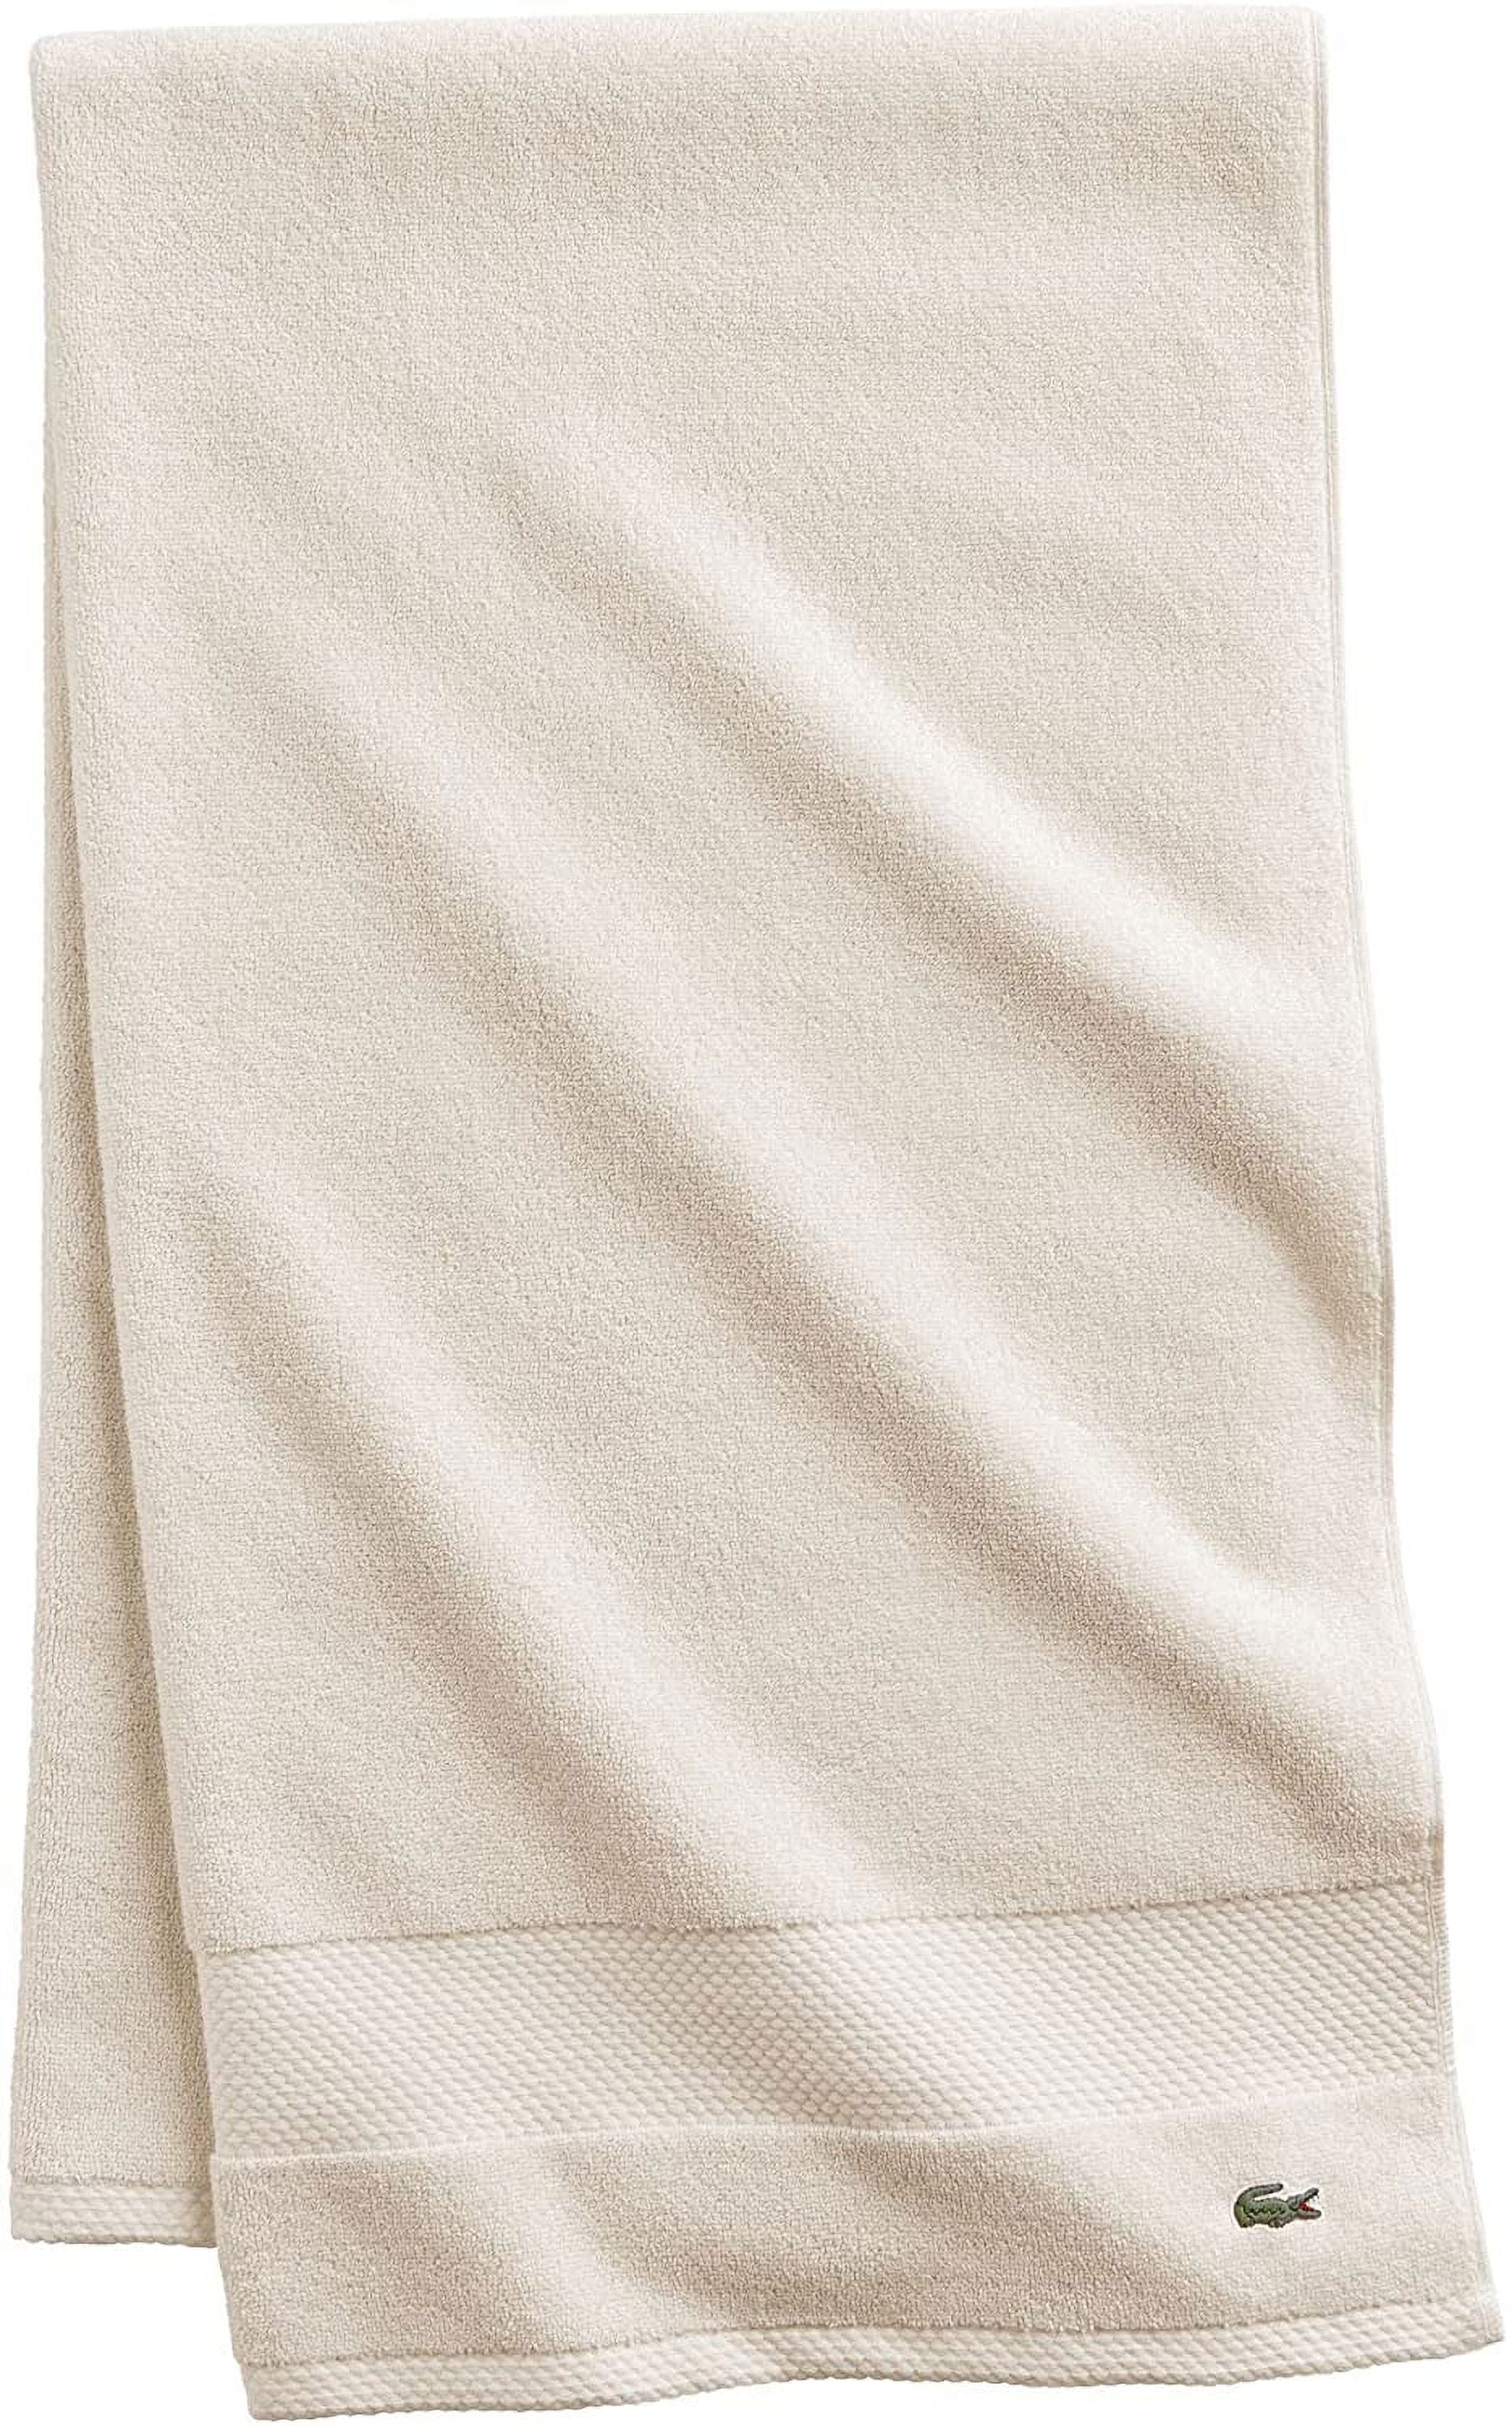 Lacoste Heritage Supima Cotton Bath Towel, Chalk, 30 x 54